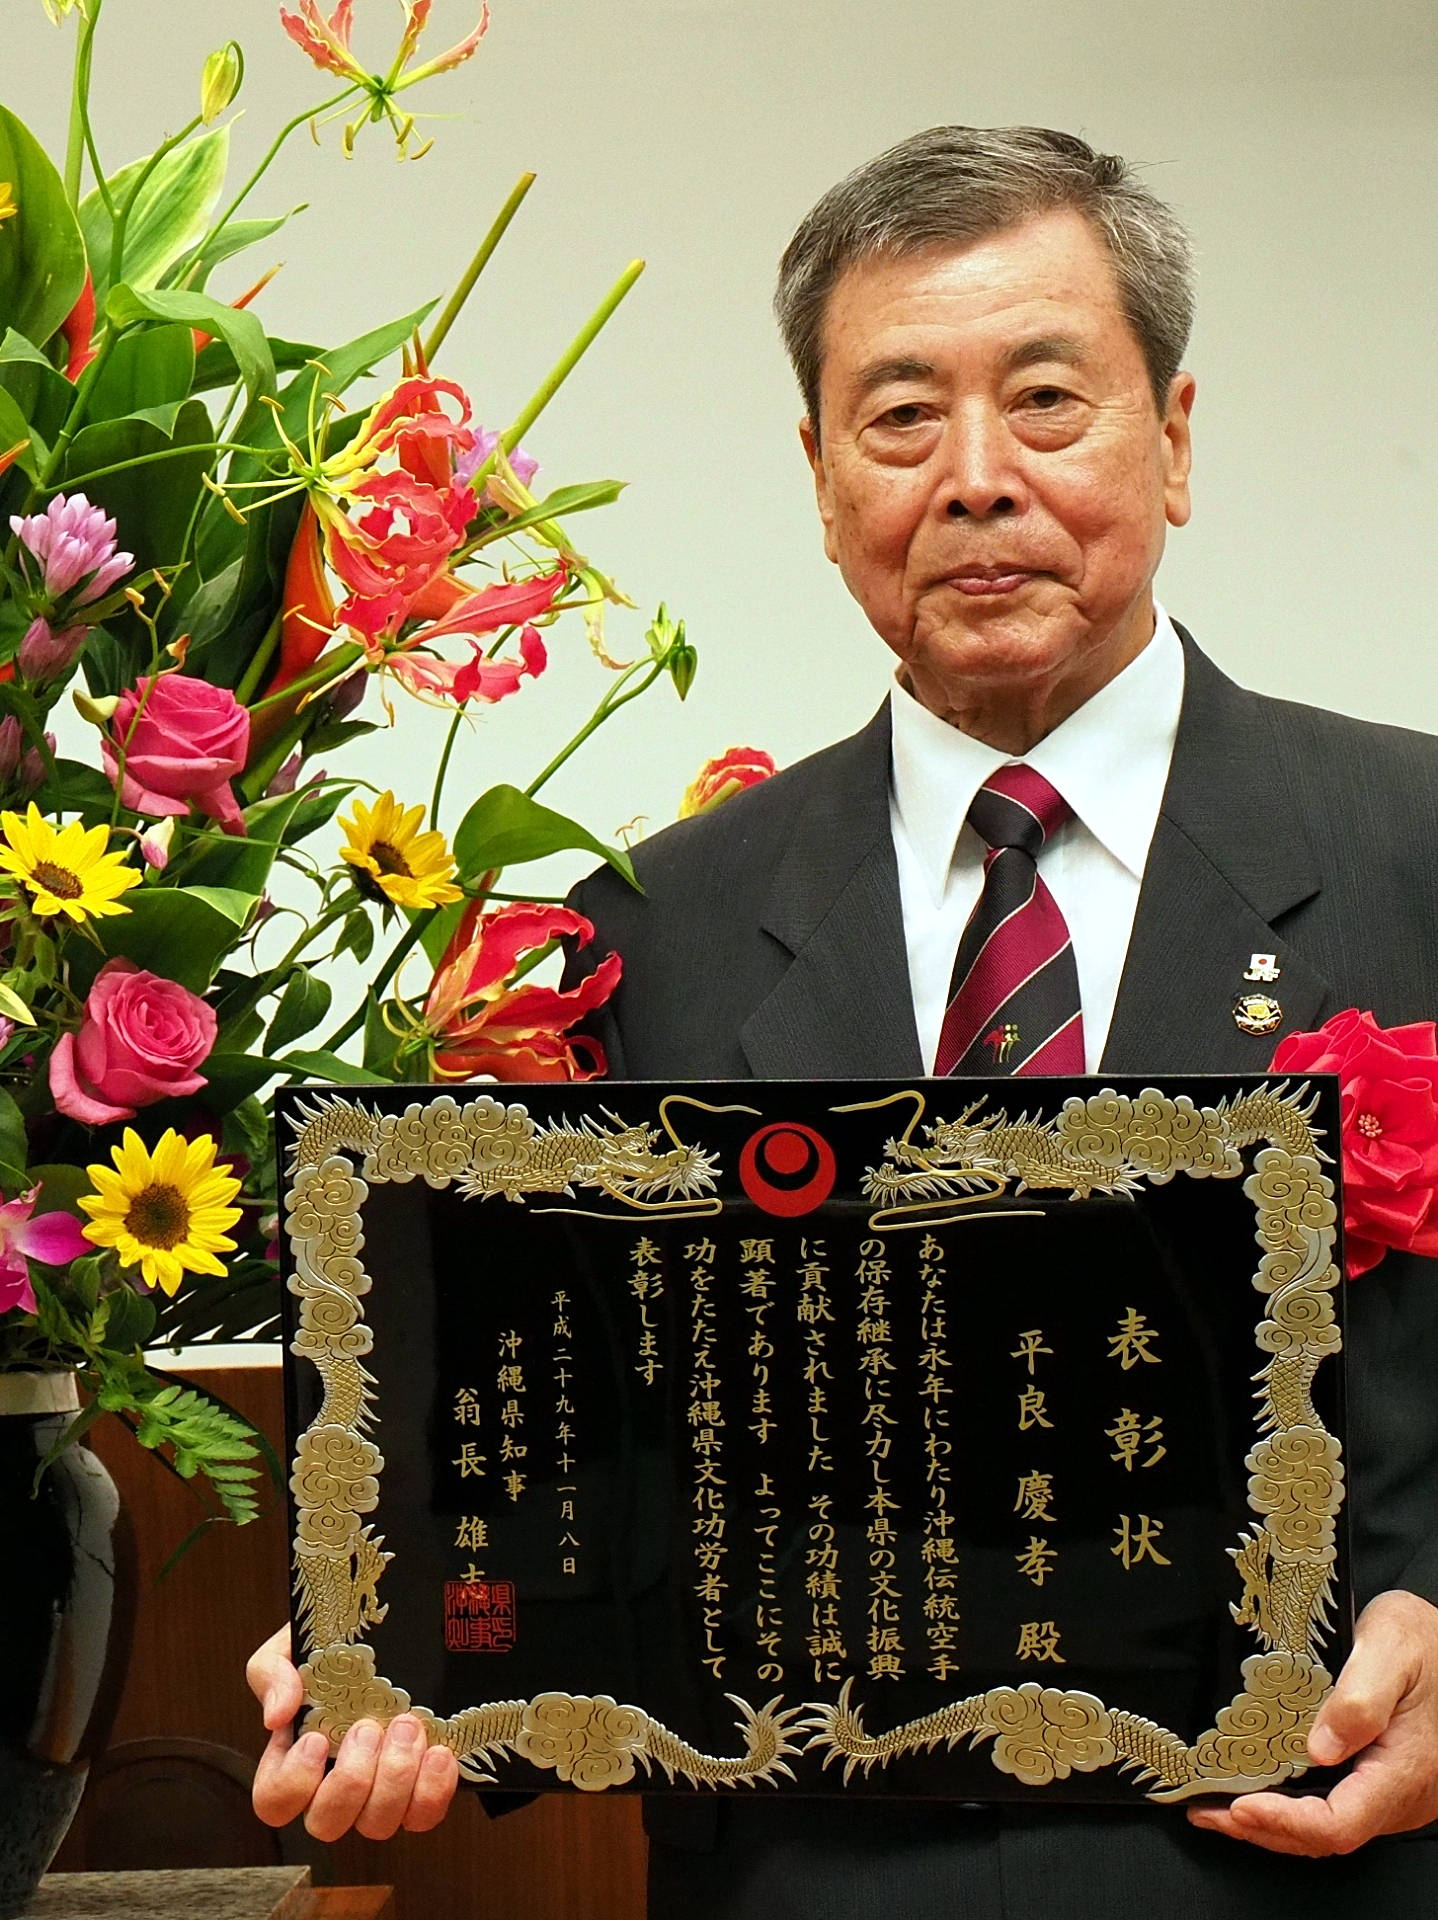 President Taira Yoshitaka